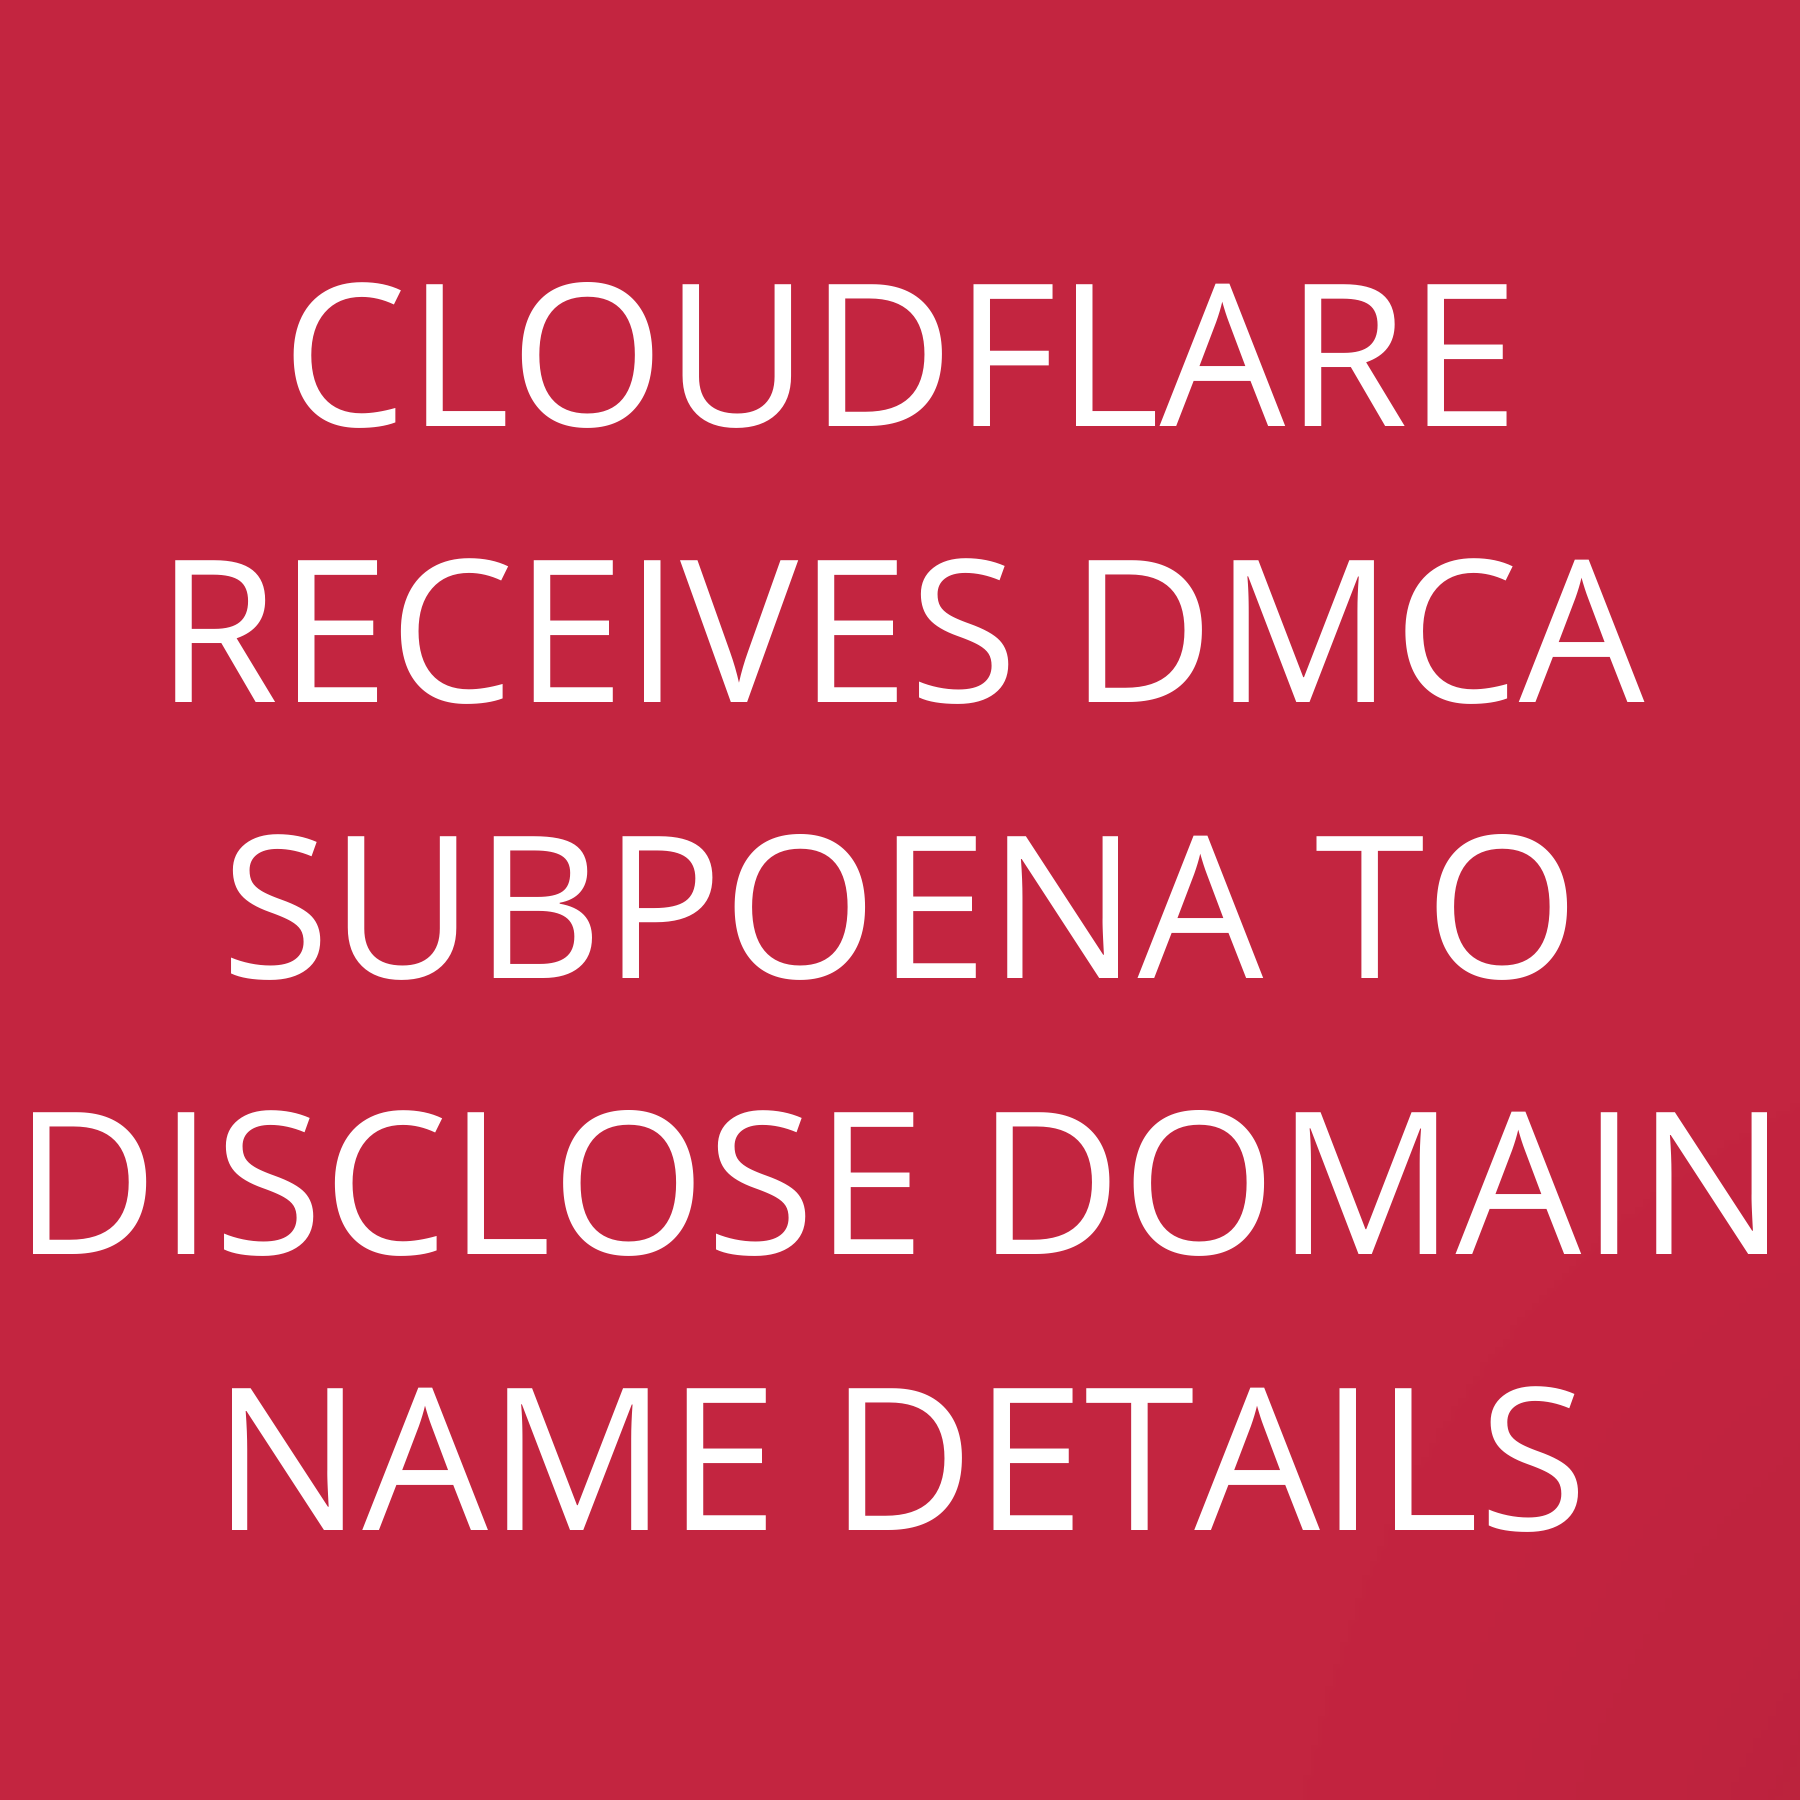 Cloudflare receives DMCA Subpoena to disclose domain name details